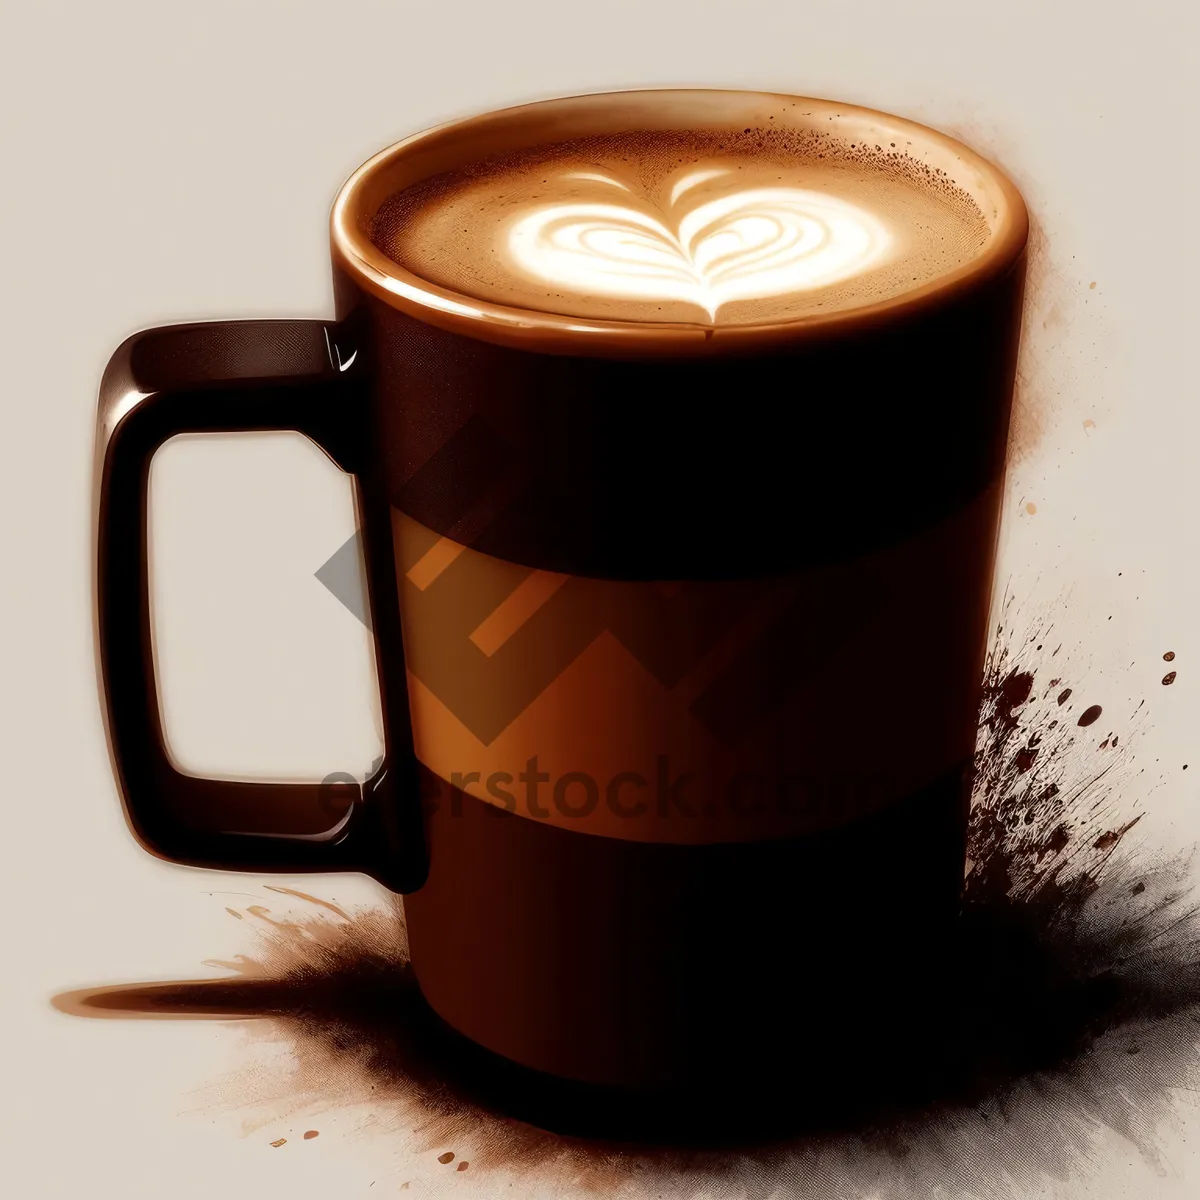 Picture of Dark, Morning Brew in Coffee Mug